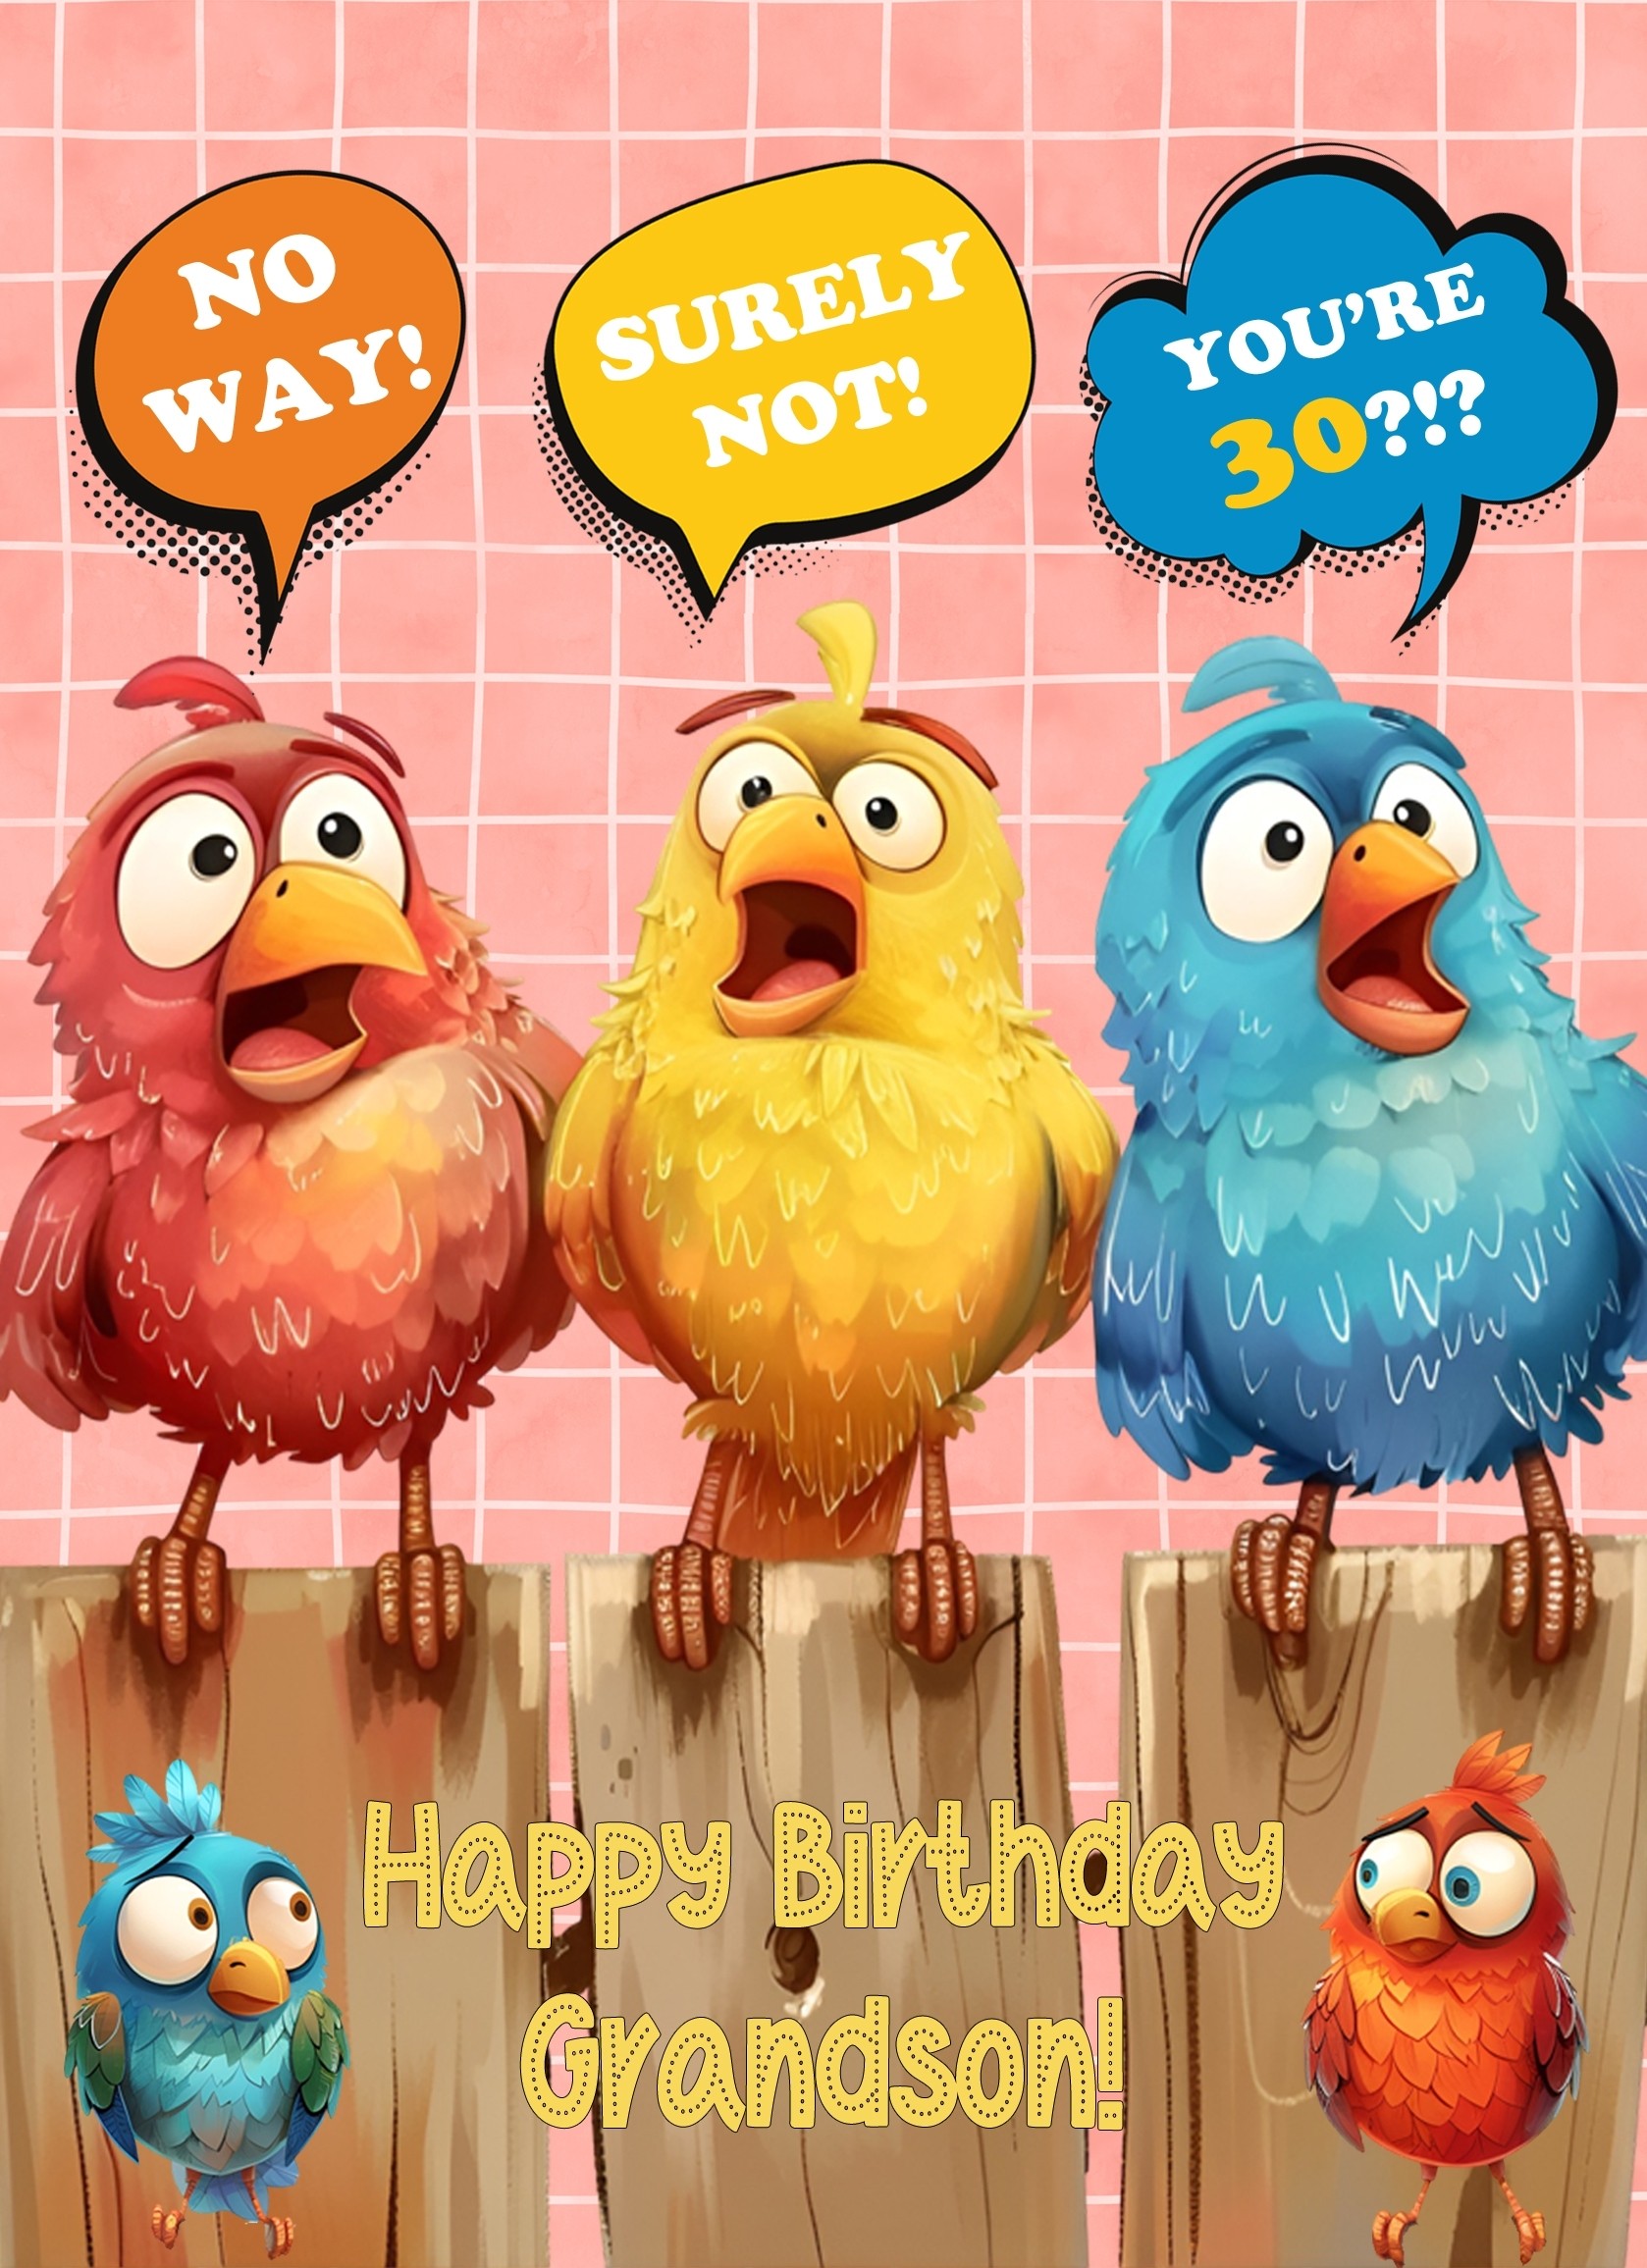 Grandson 30th Birthday Card (Funny Birds Surprised)